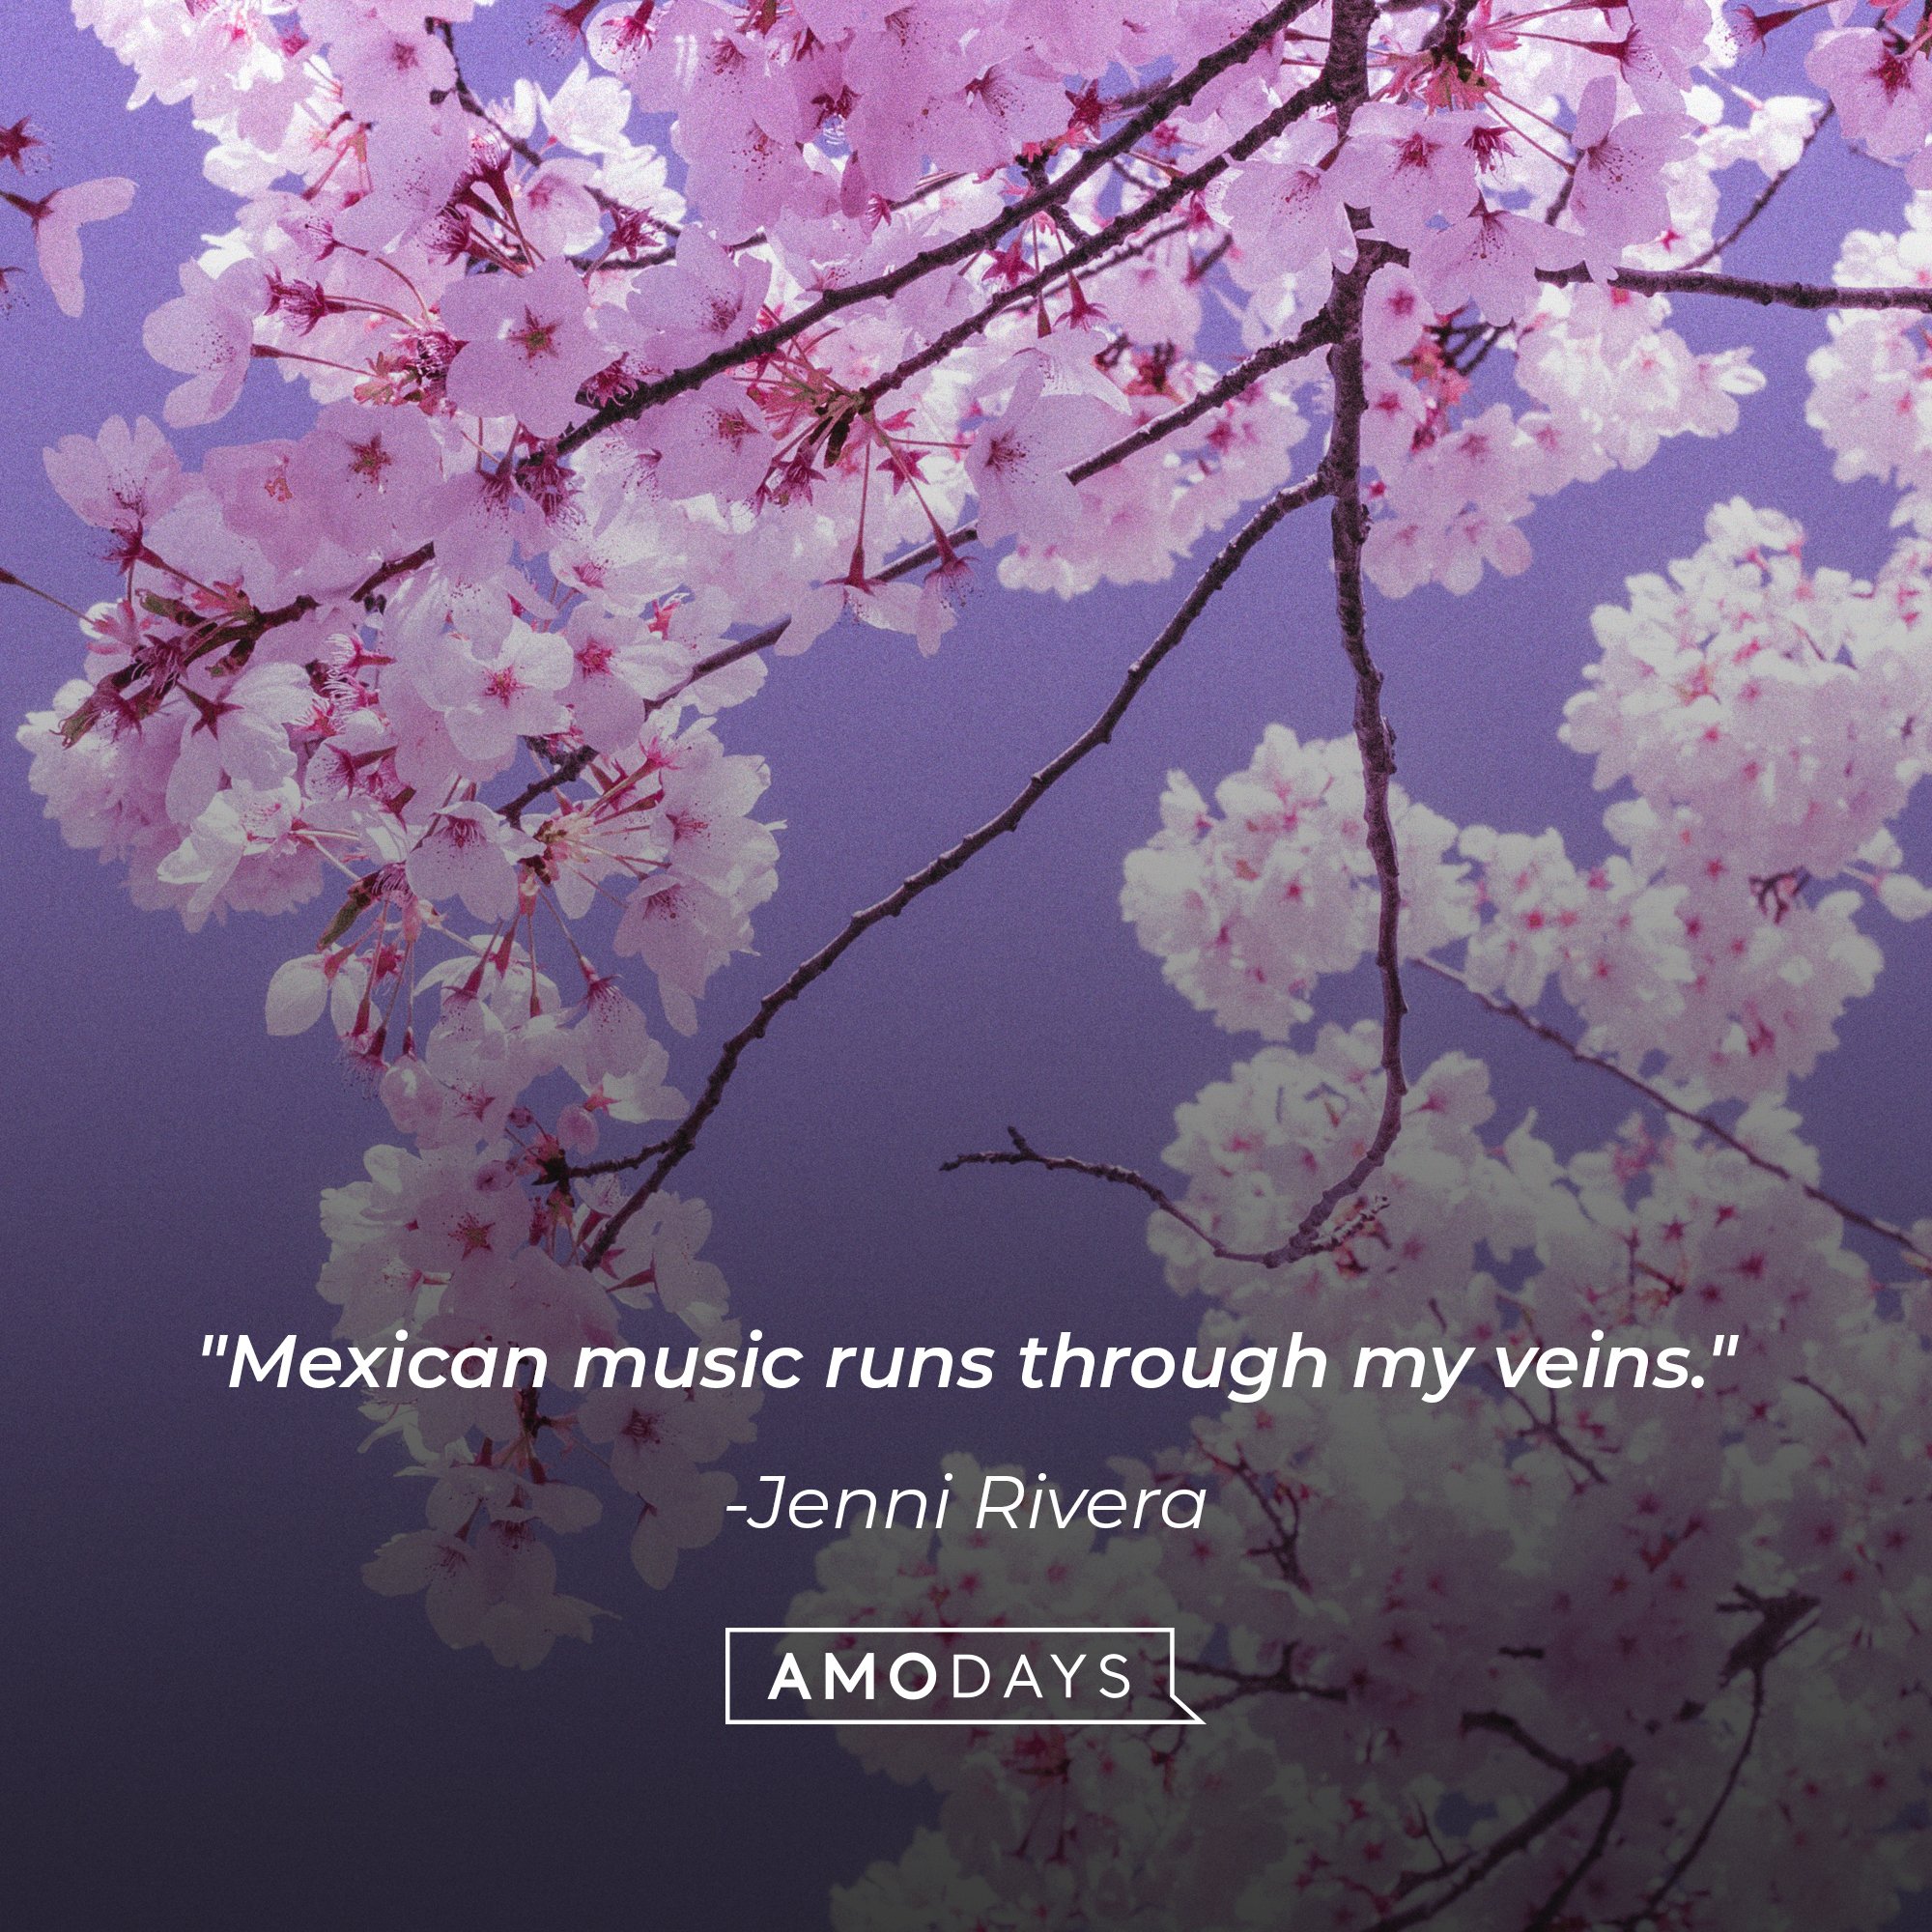 Jenni Rivera’s quote: “Mexican music runs through my veins.” | Image: AmoDays